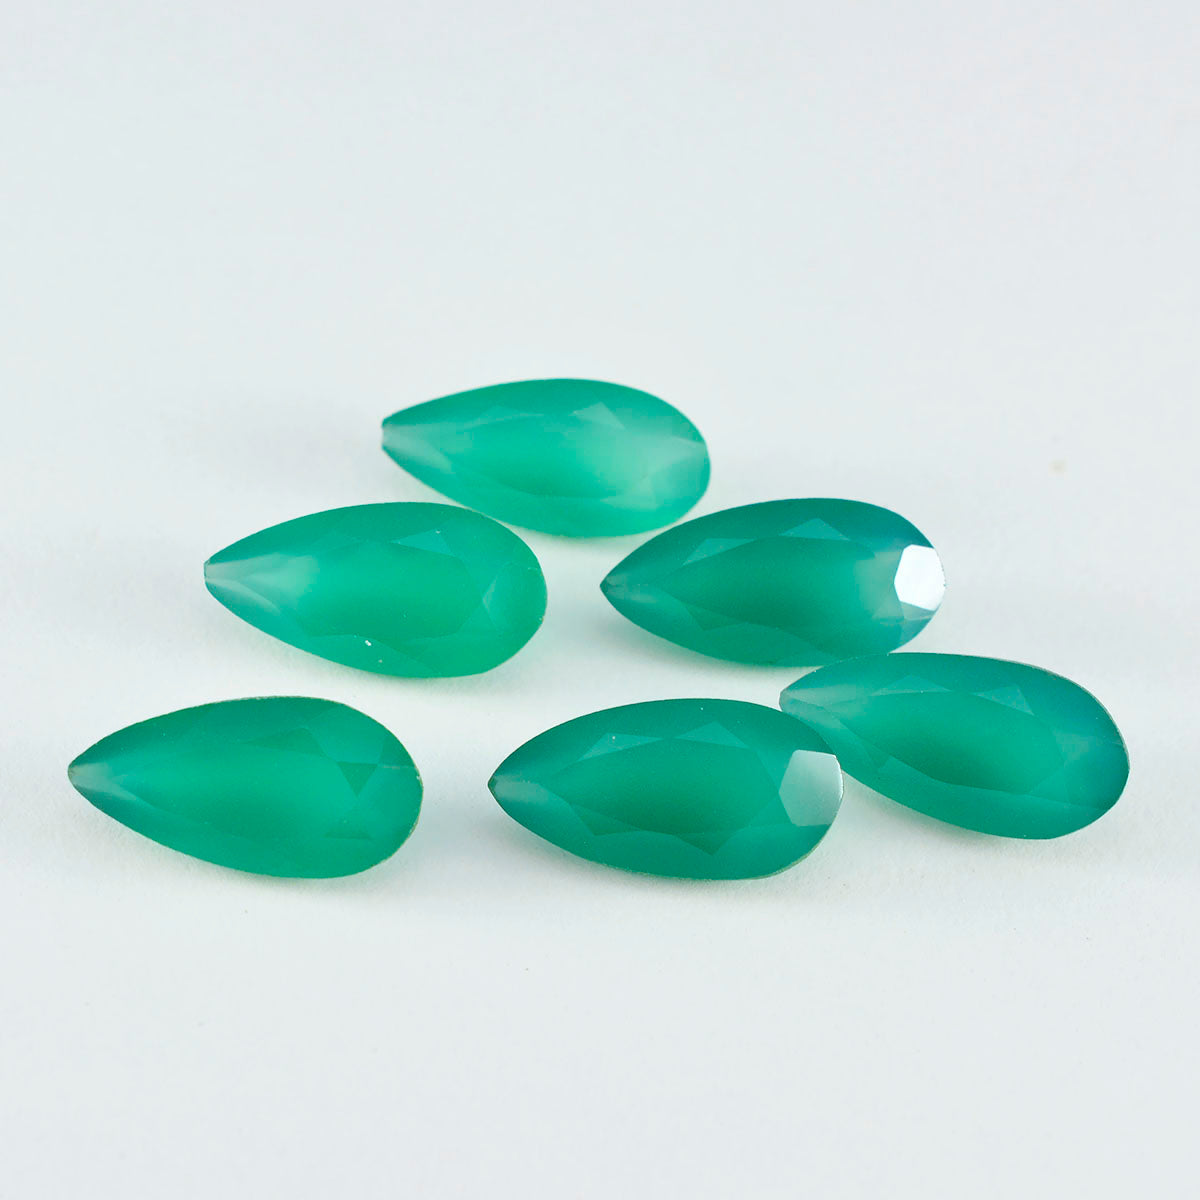 riyogems 1 st naturlig grön onyx fasetterad 7x14 mm päronform söt kvalitetssten